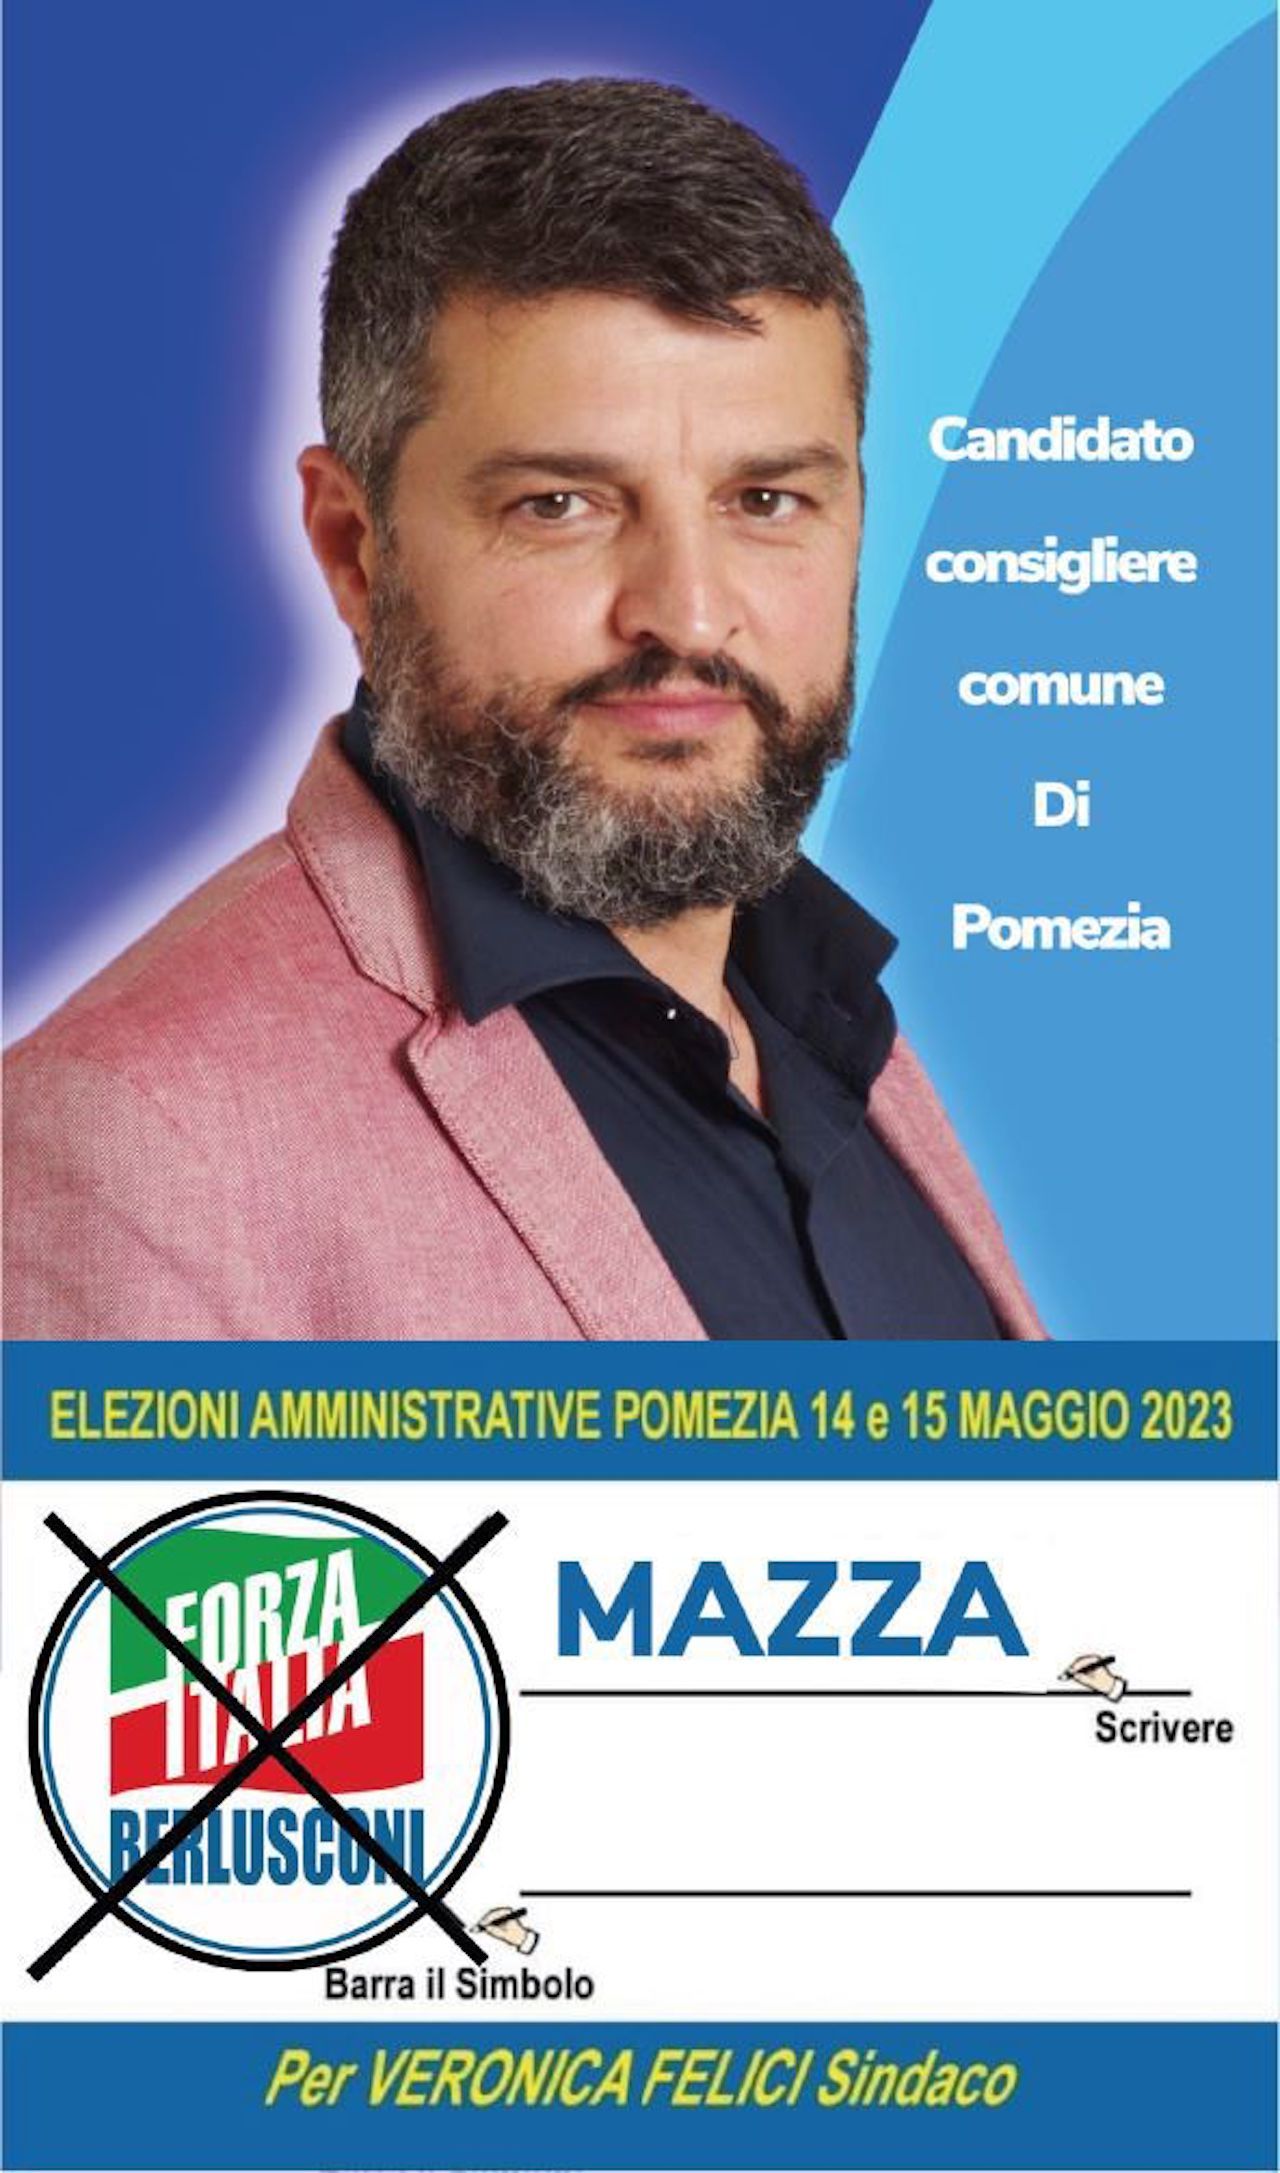 Claudio Mazza